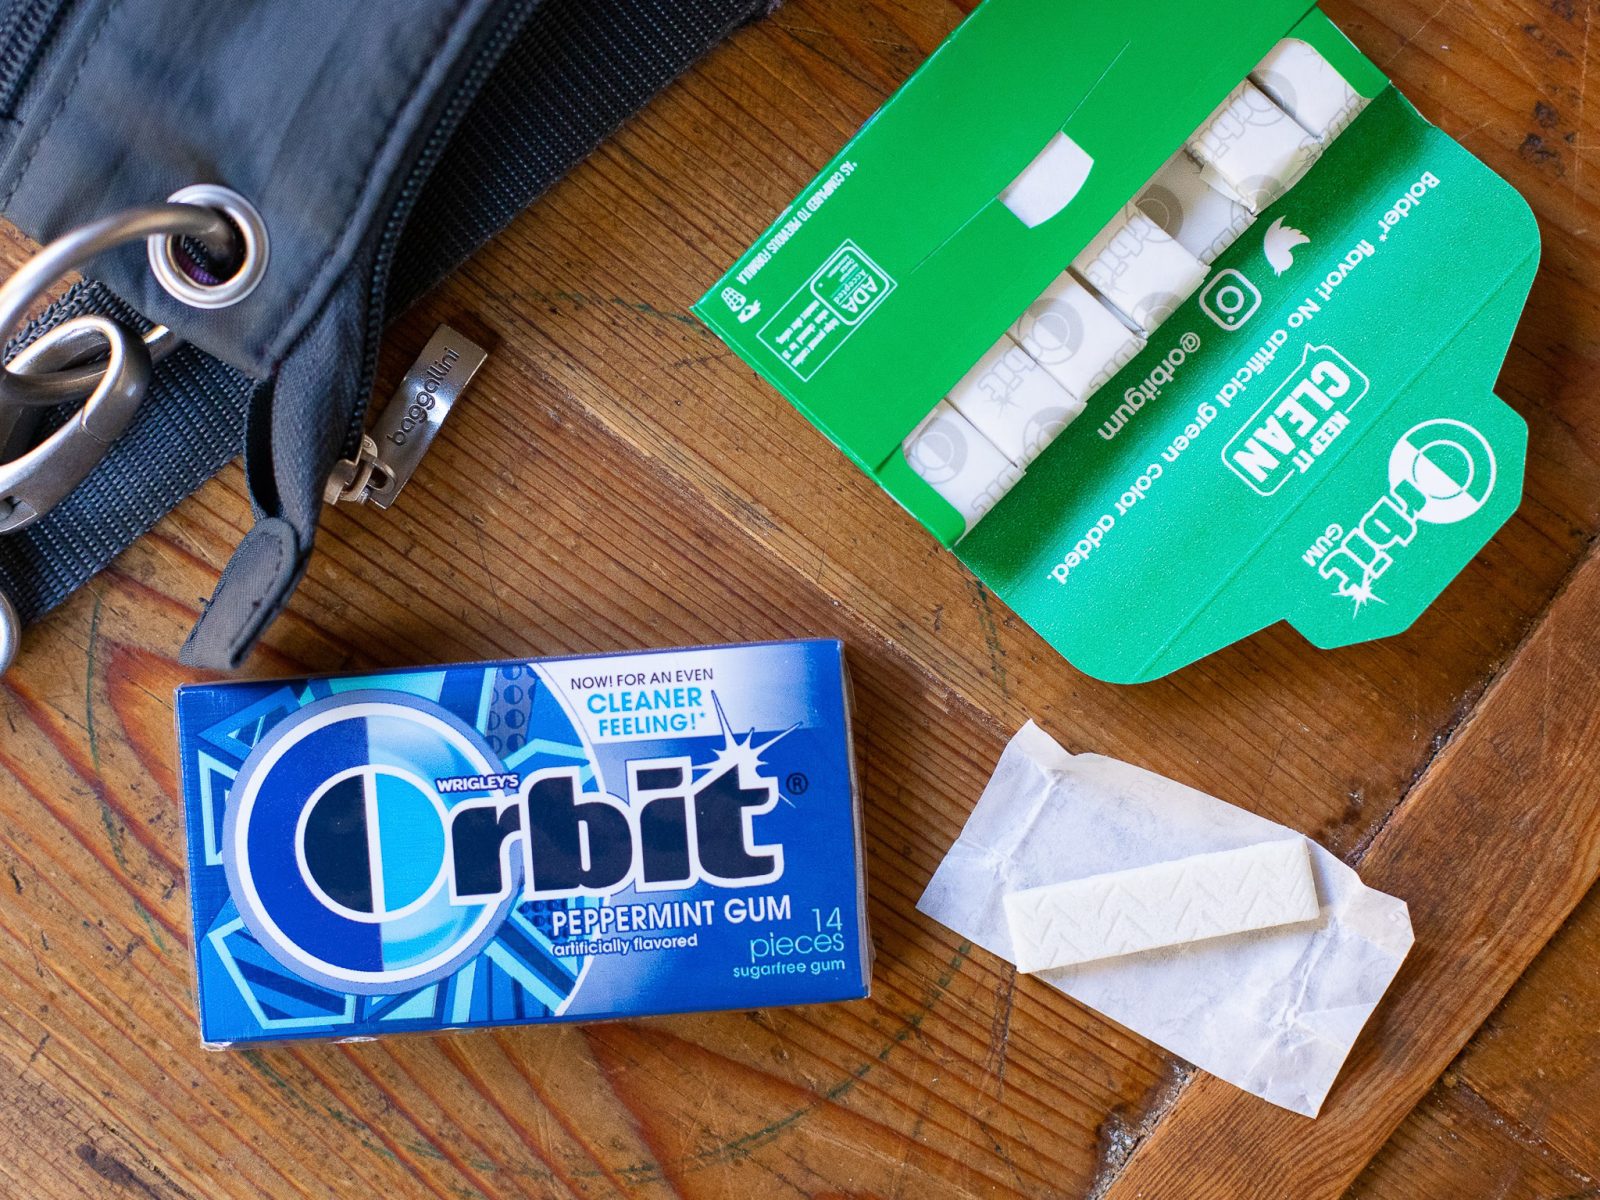 Orbit Gum Just $1.19 Per Pack After Coupon At Kroger